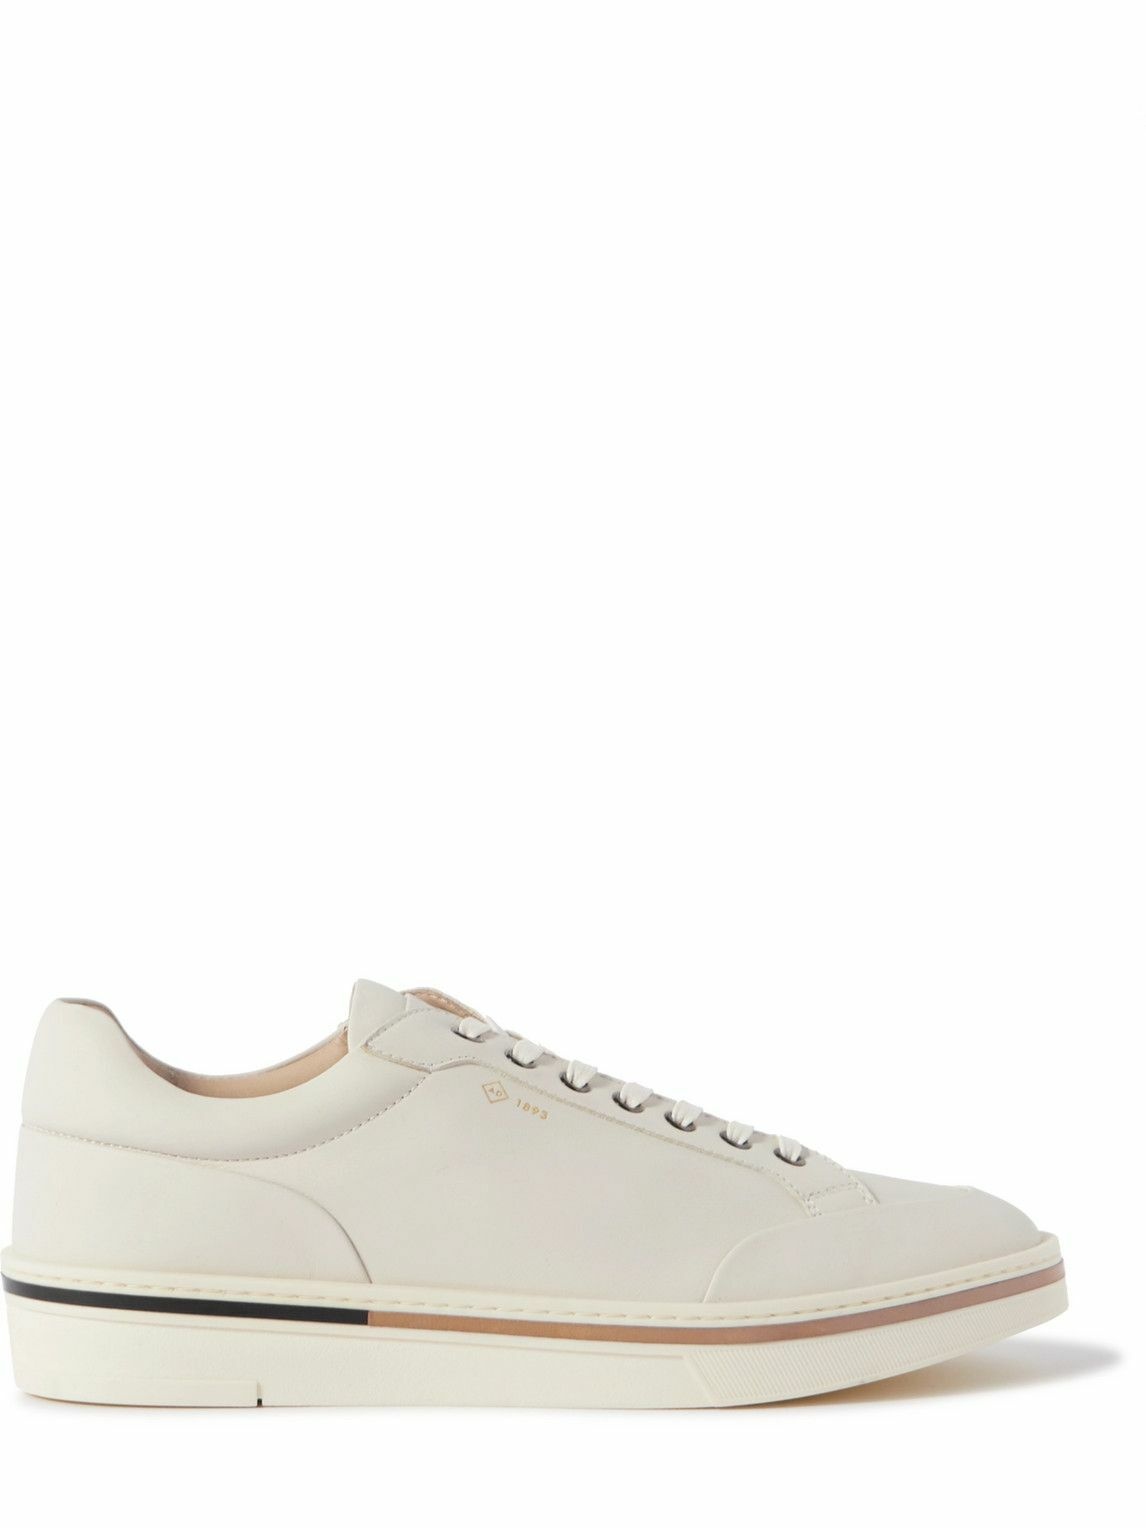 Photo: Dunhill - Metropolitan Leather Sneakers - White